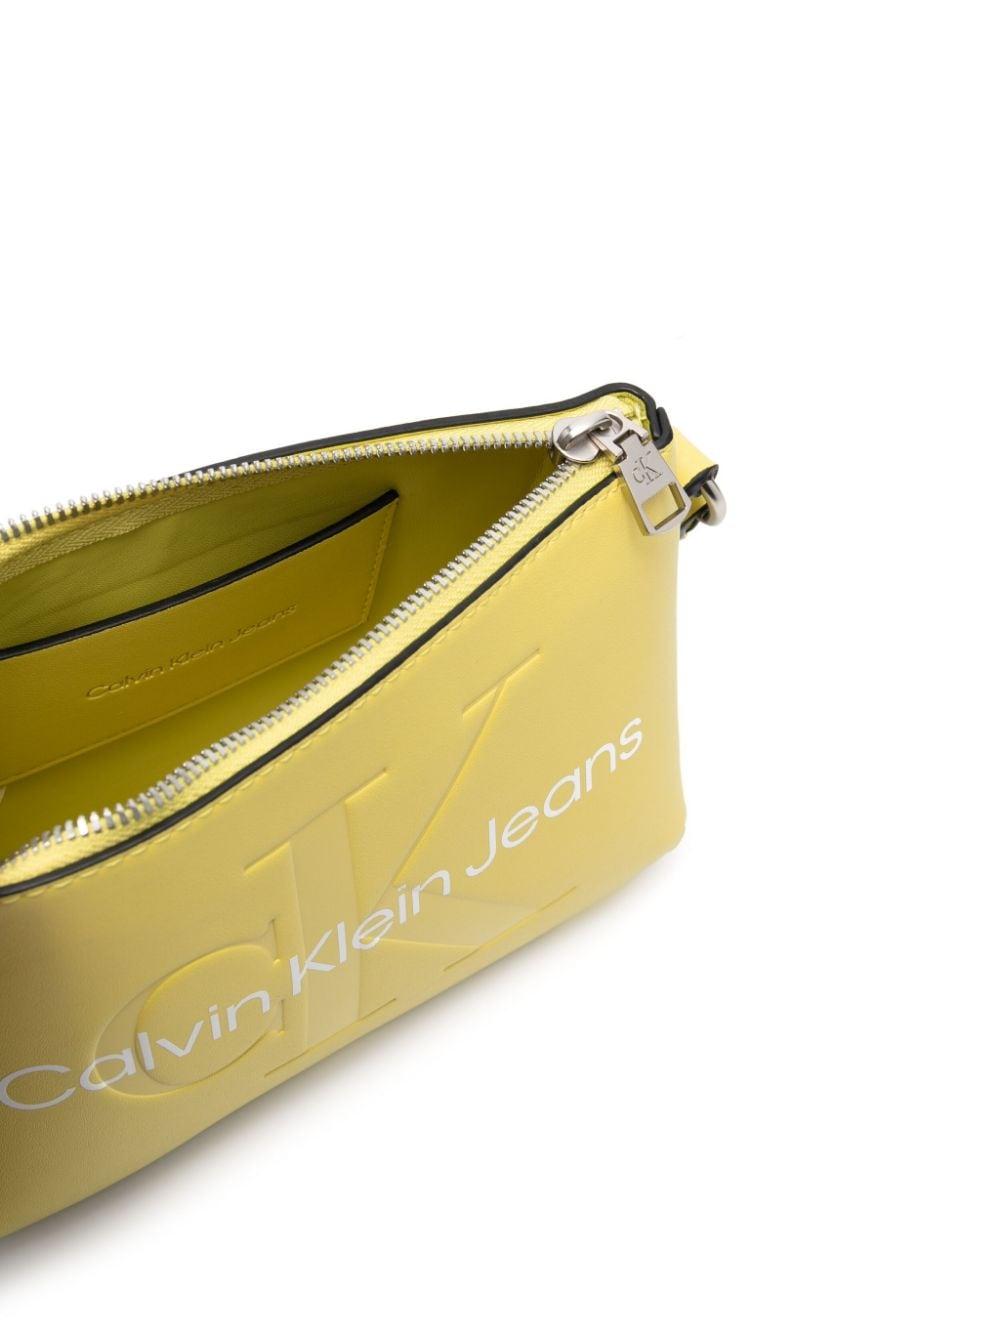 Calvin Klein Logo Faux Leather Phone Crossbody Bag on SALE